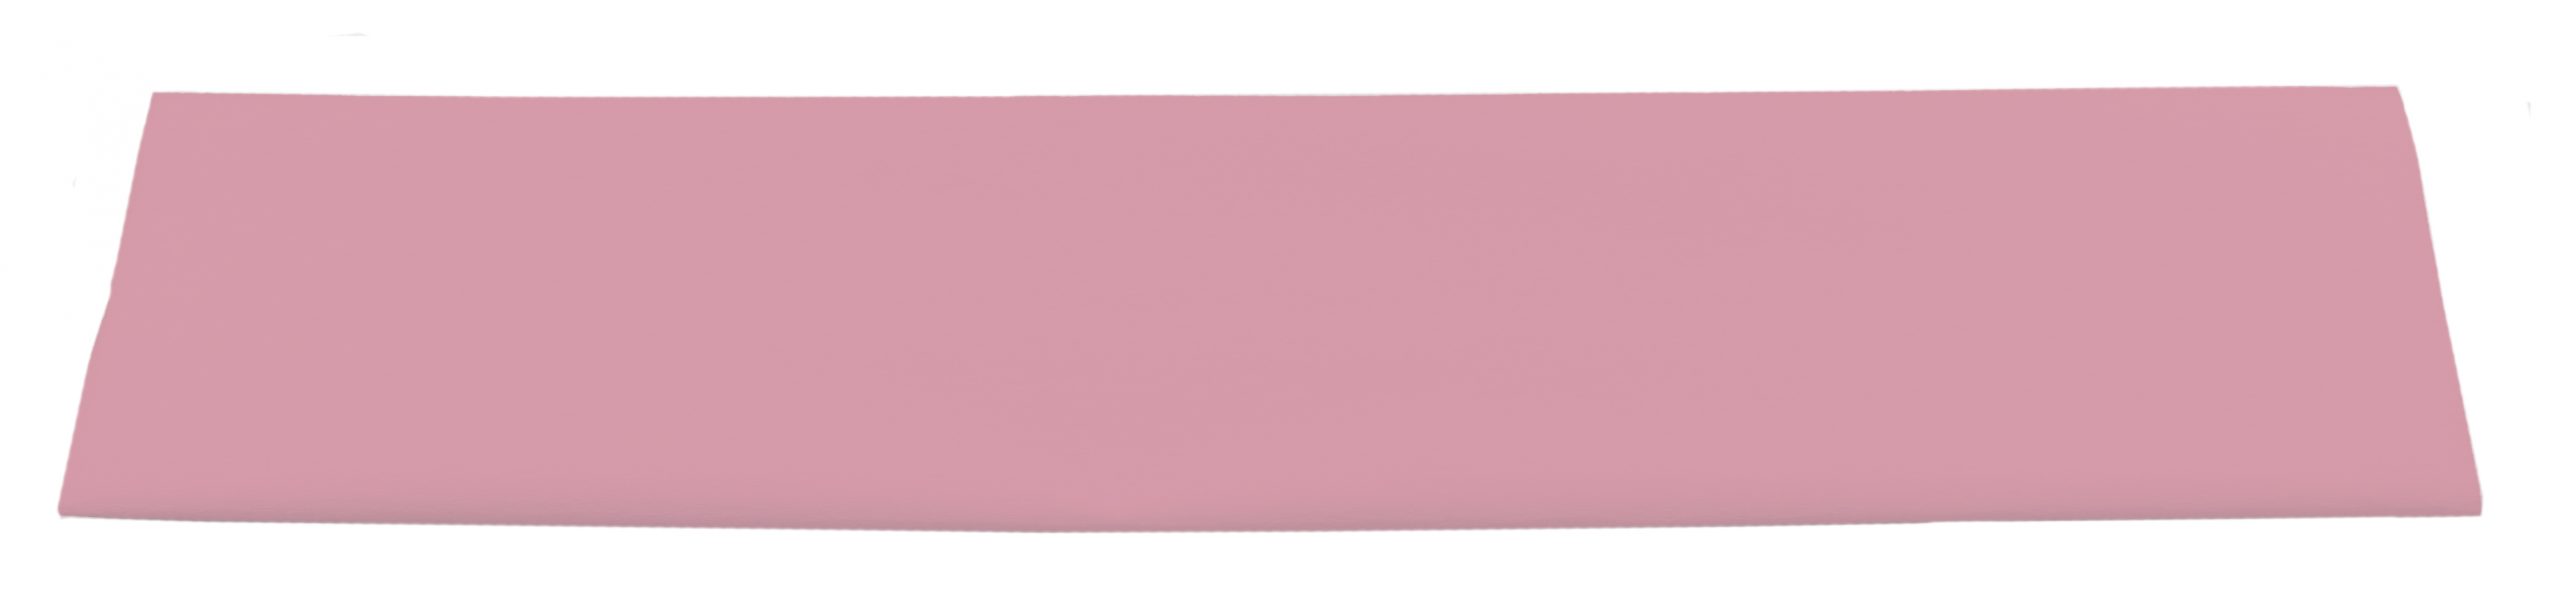 Hârtie creponată Hobby 50 x 200 cm, roz, Herlitz